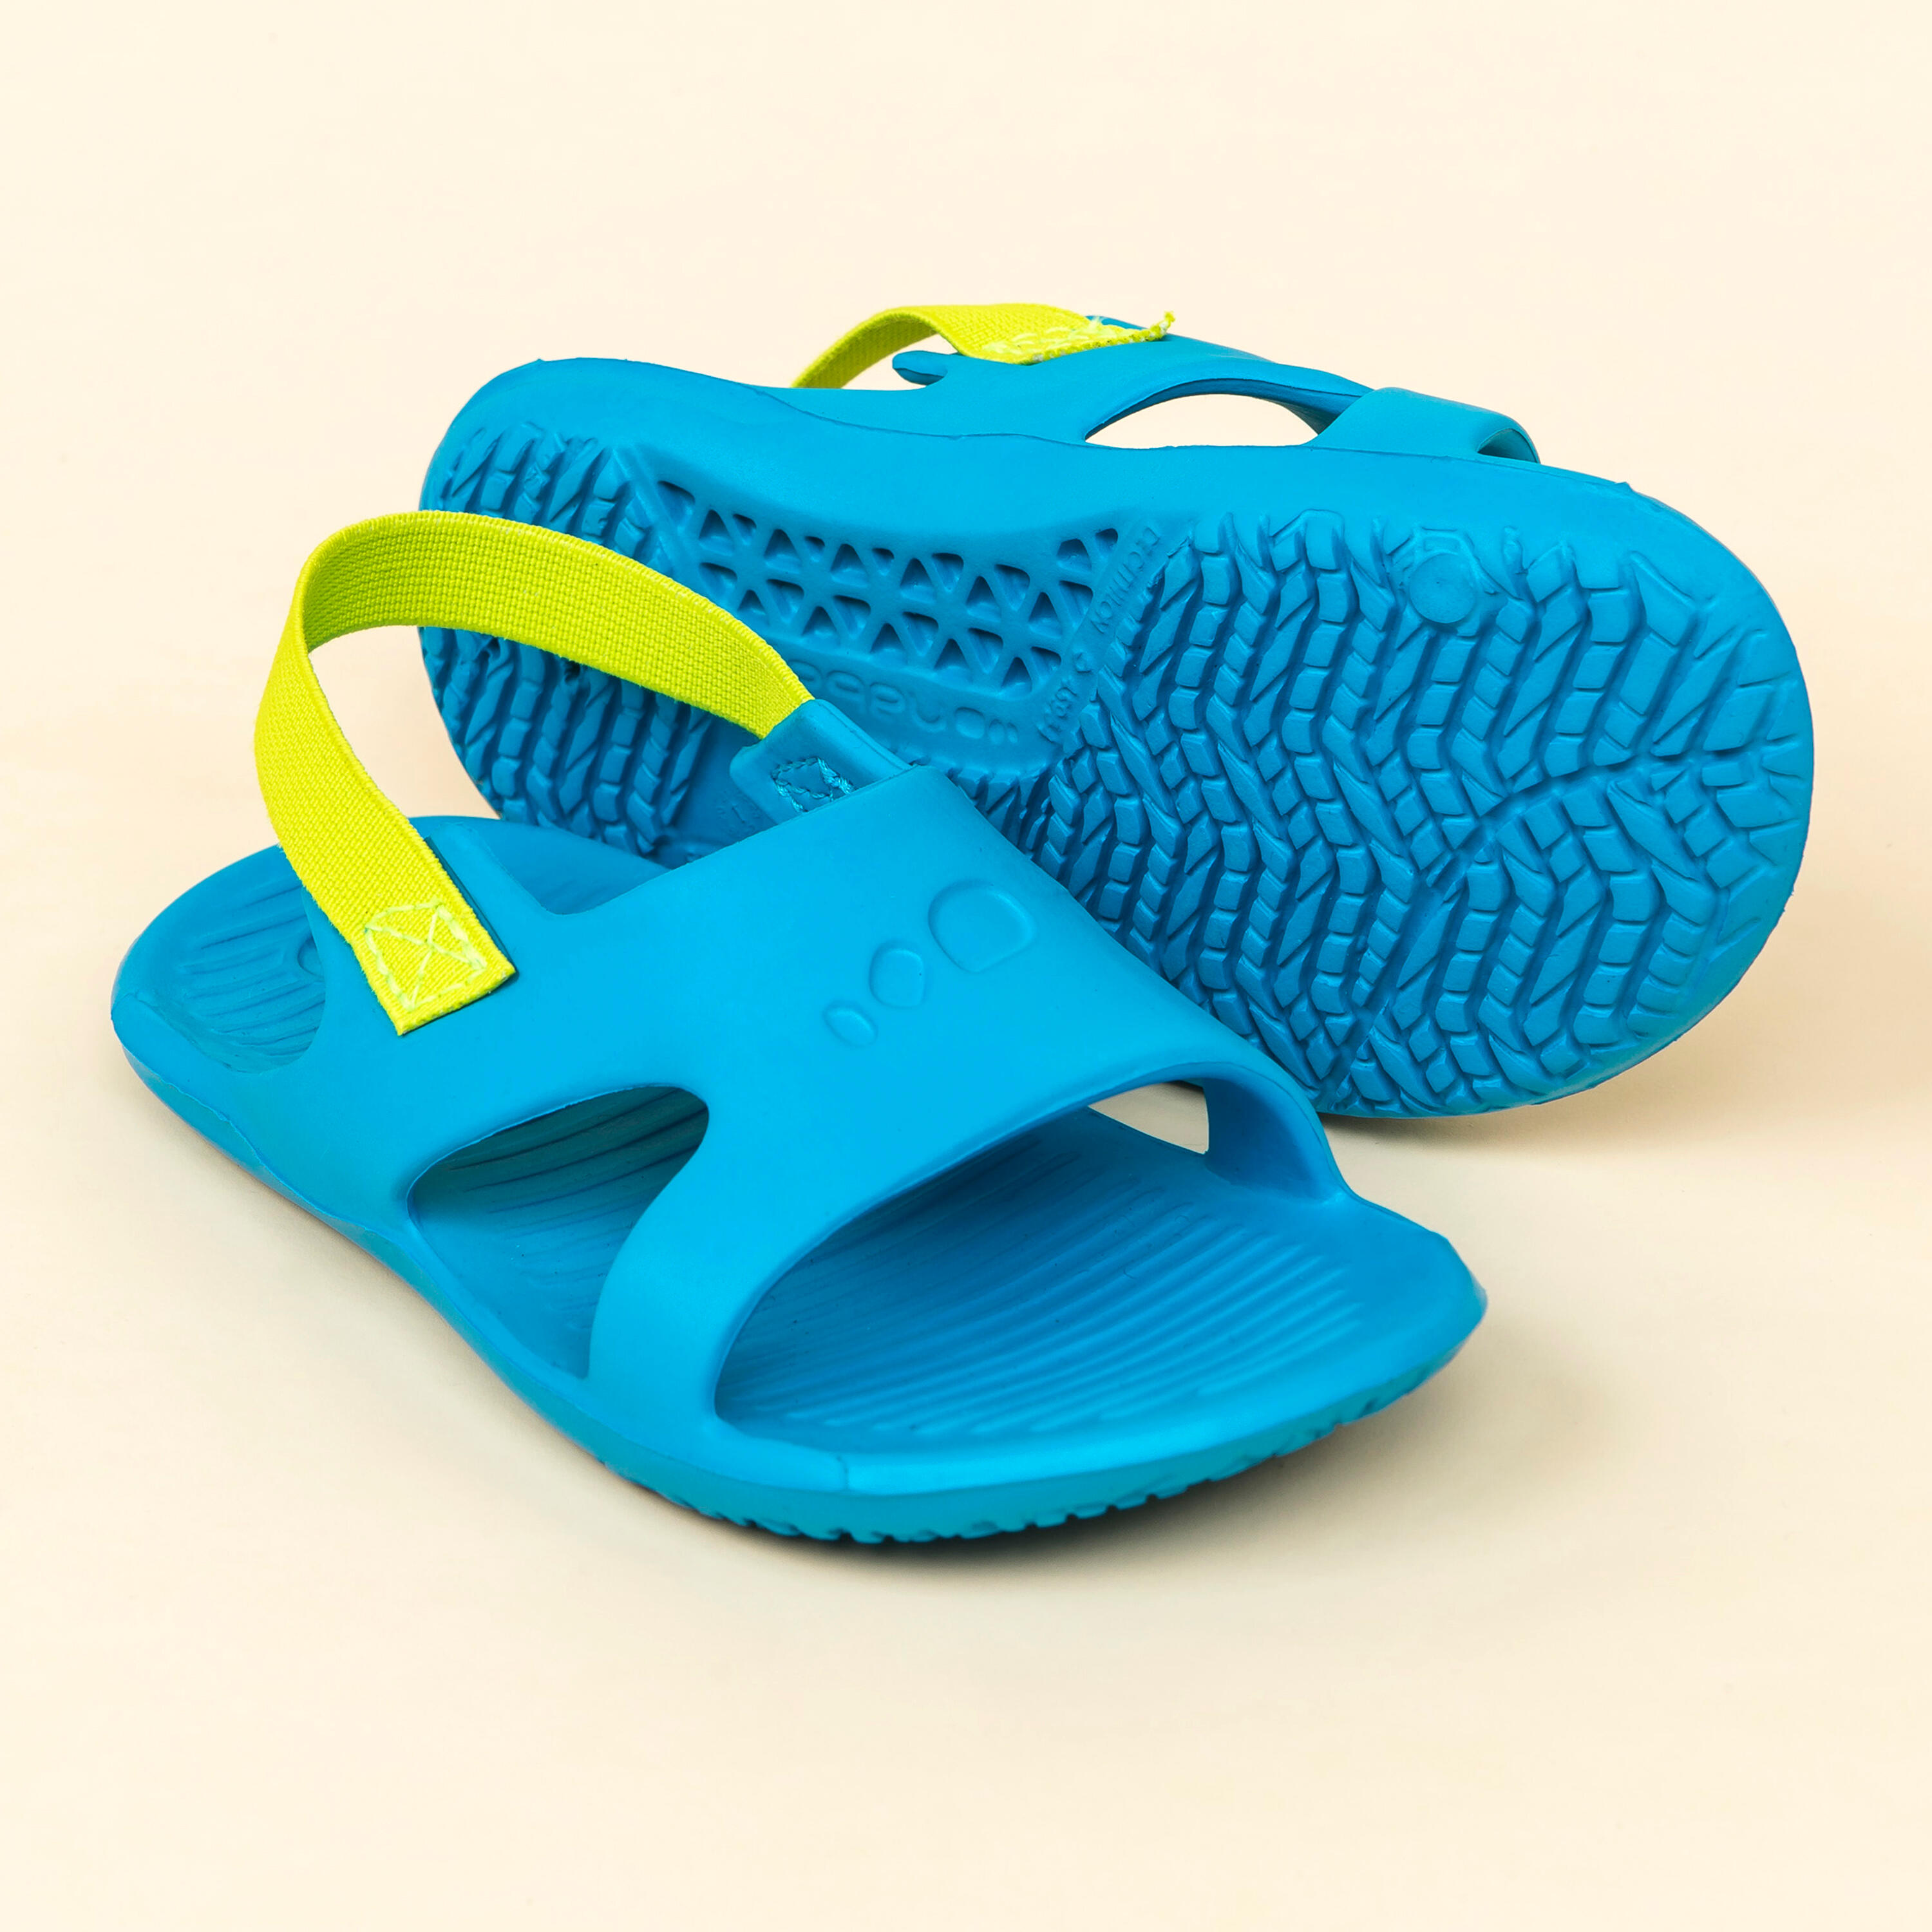 Kids Sandals MH100 - Blue/Pink